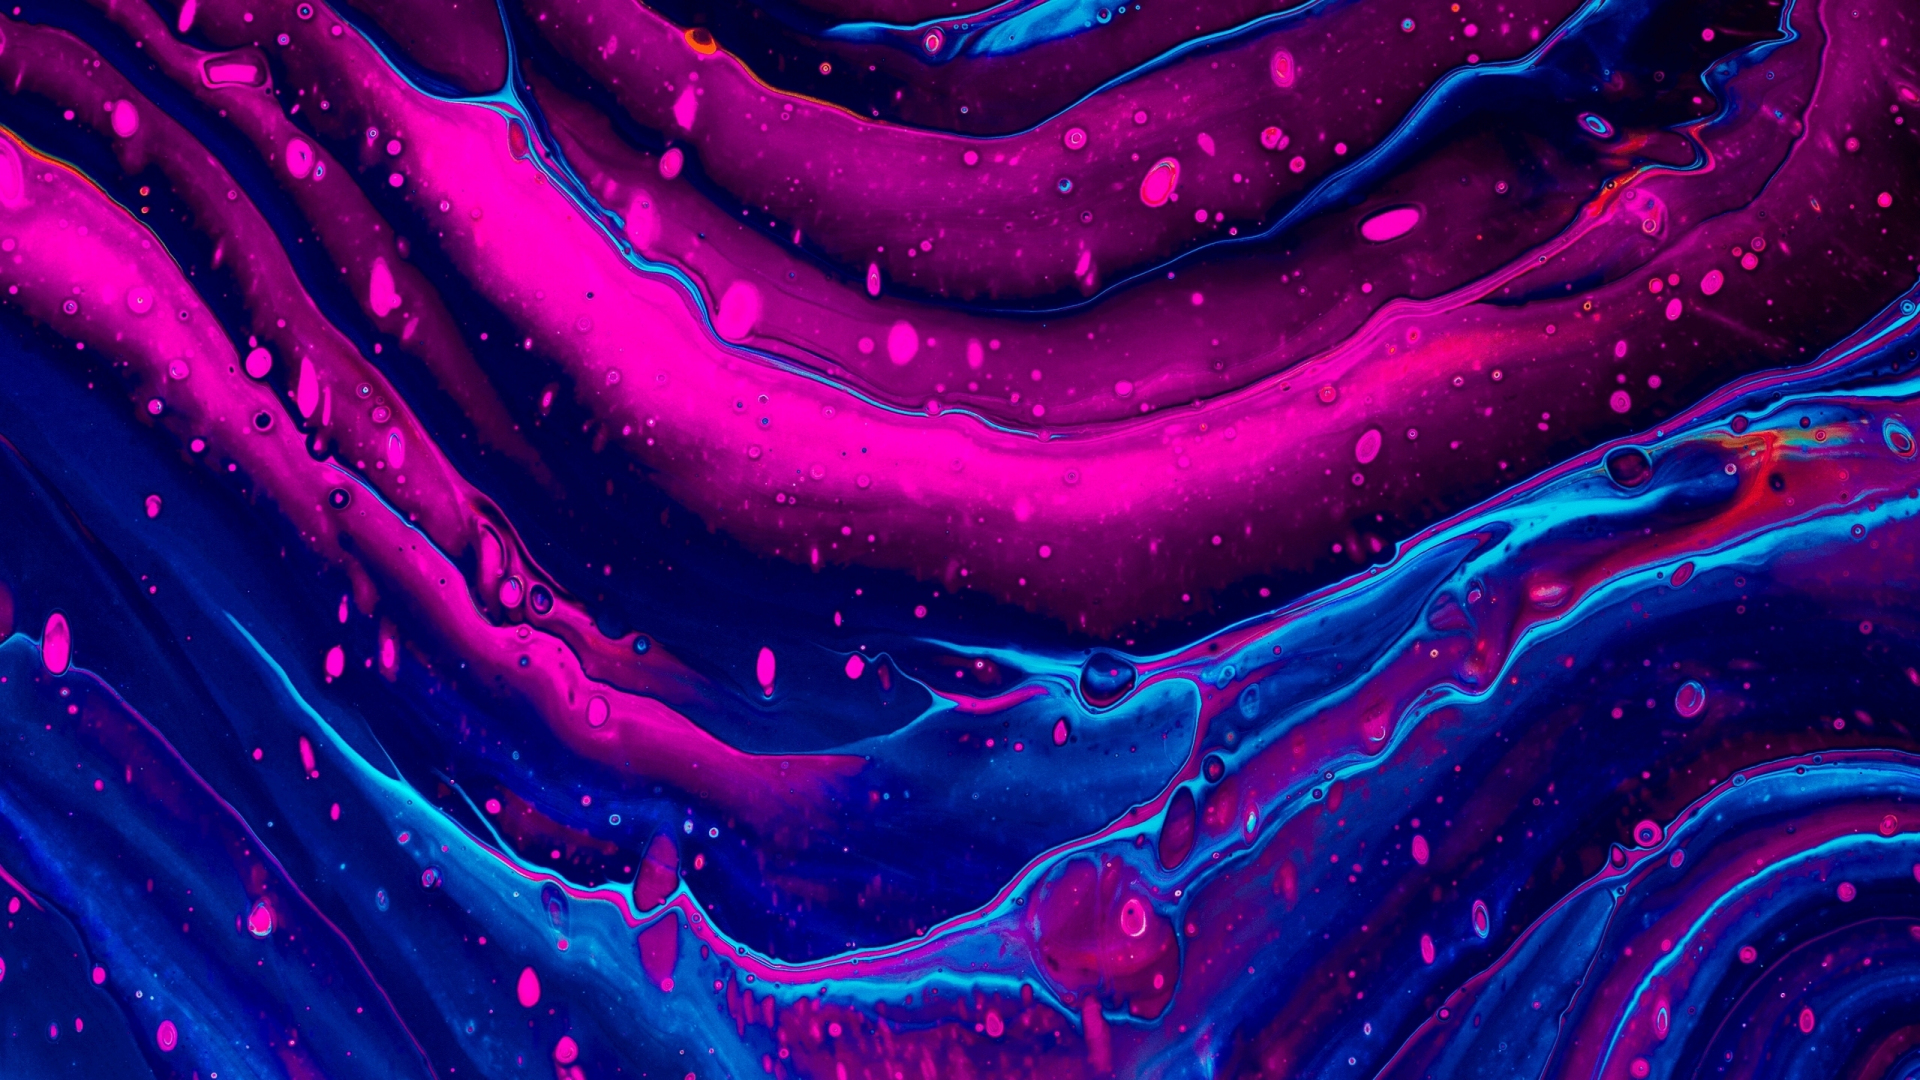 Download 1920x1080 wallpaper liquid flow, abstract, art pink-blue, full